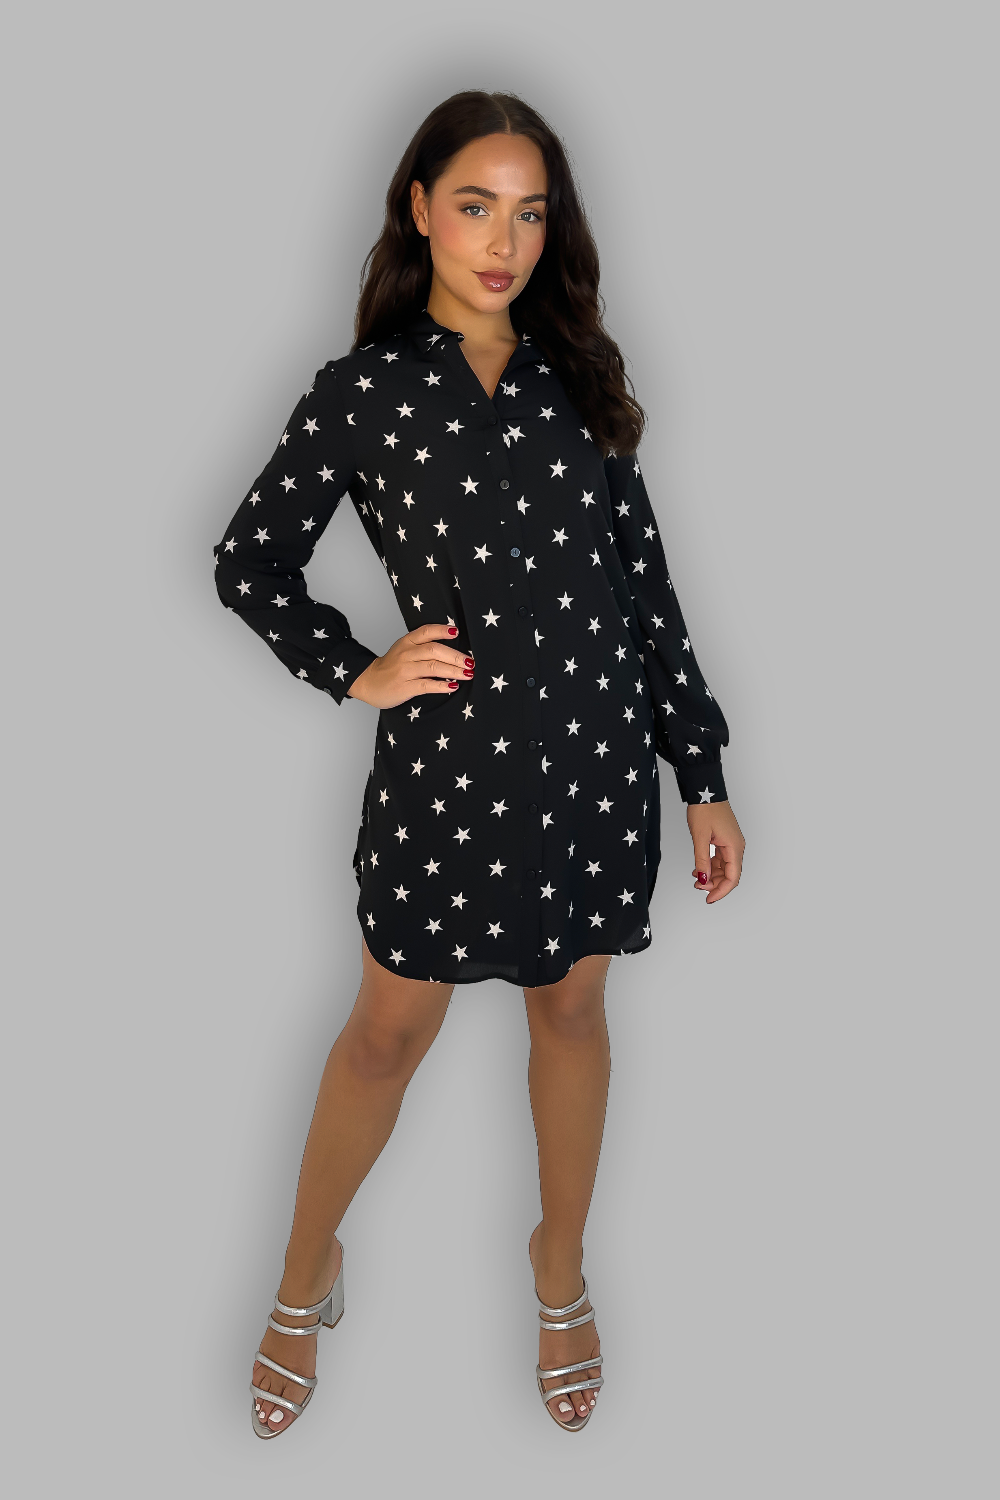 Star Print Black Long Sleeve Shirt Dress